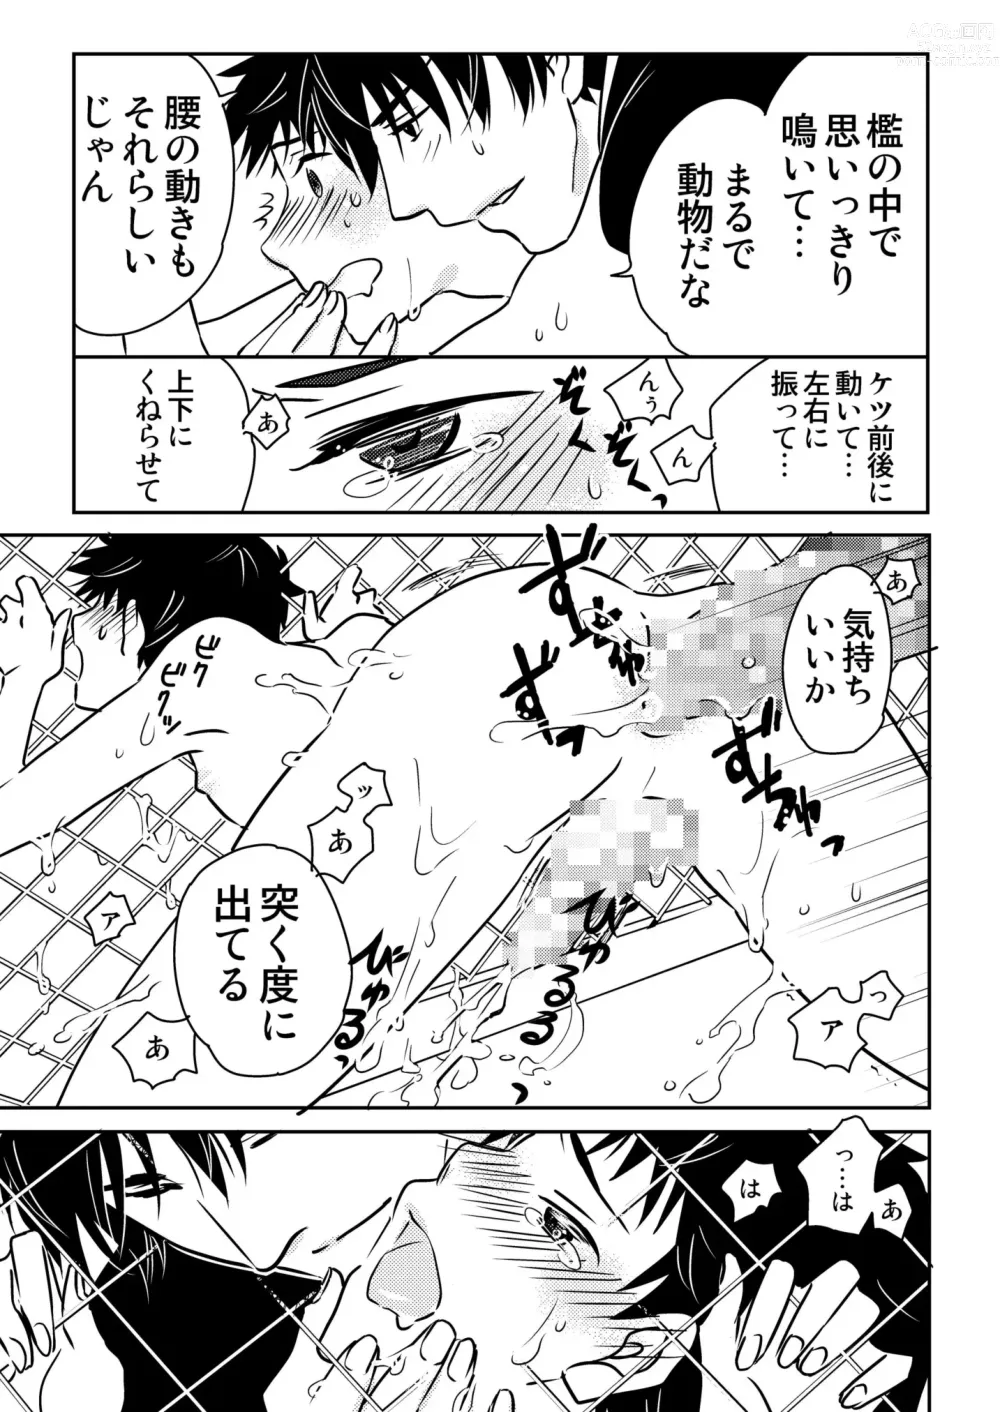 Page 15 of doujinshi Usagi no Koe 2